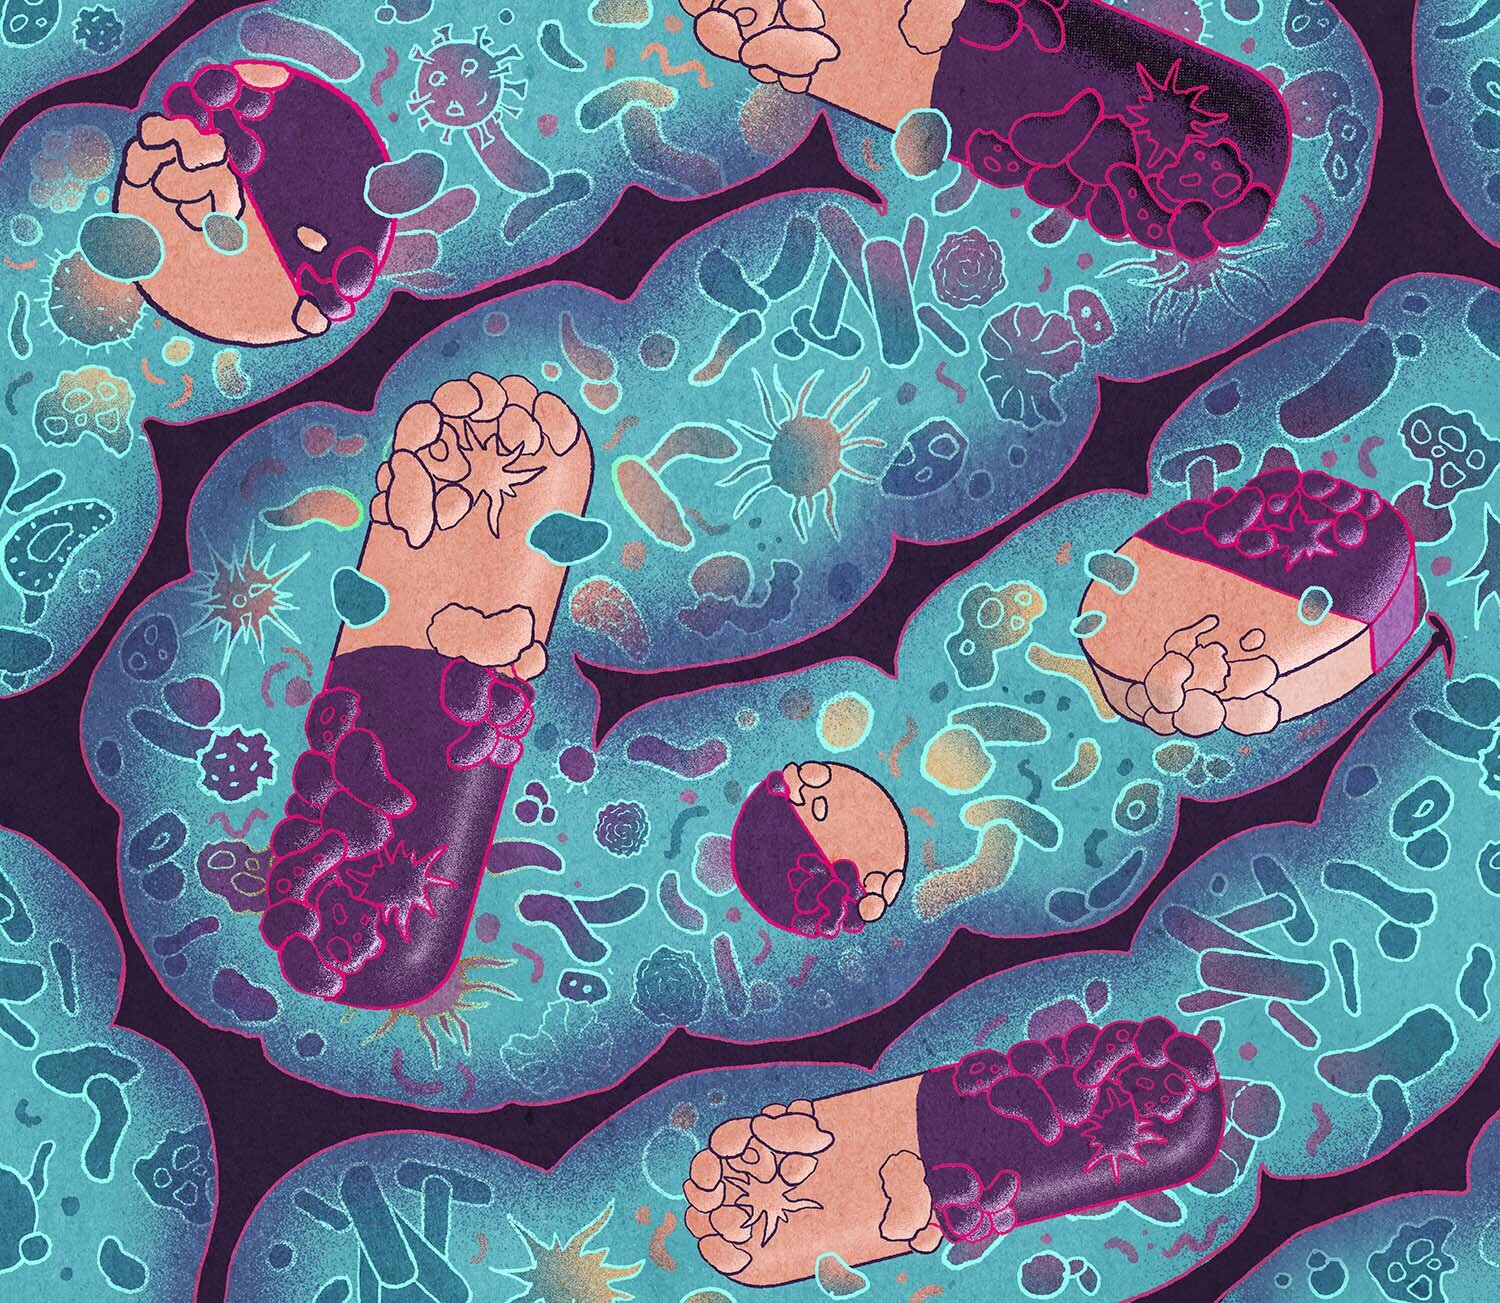 antoine-dore-science-gut-microbiome-editorial-illustration.jpg